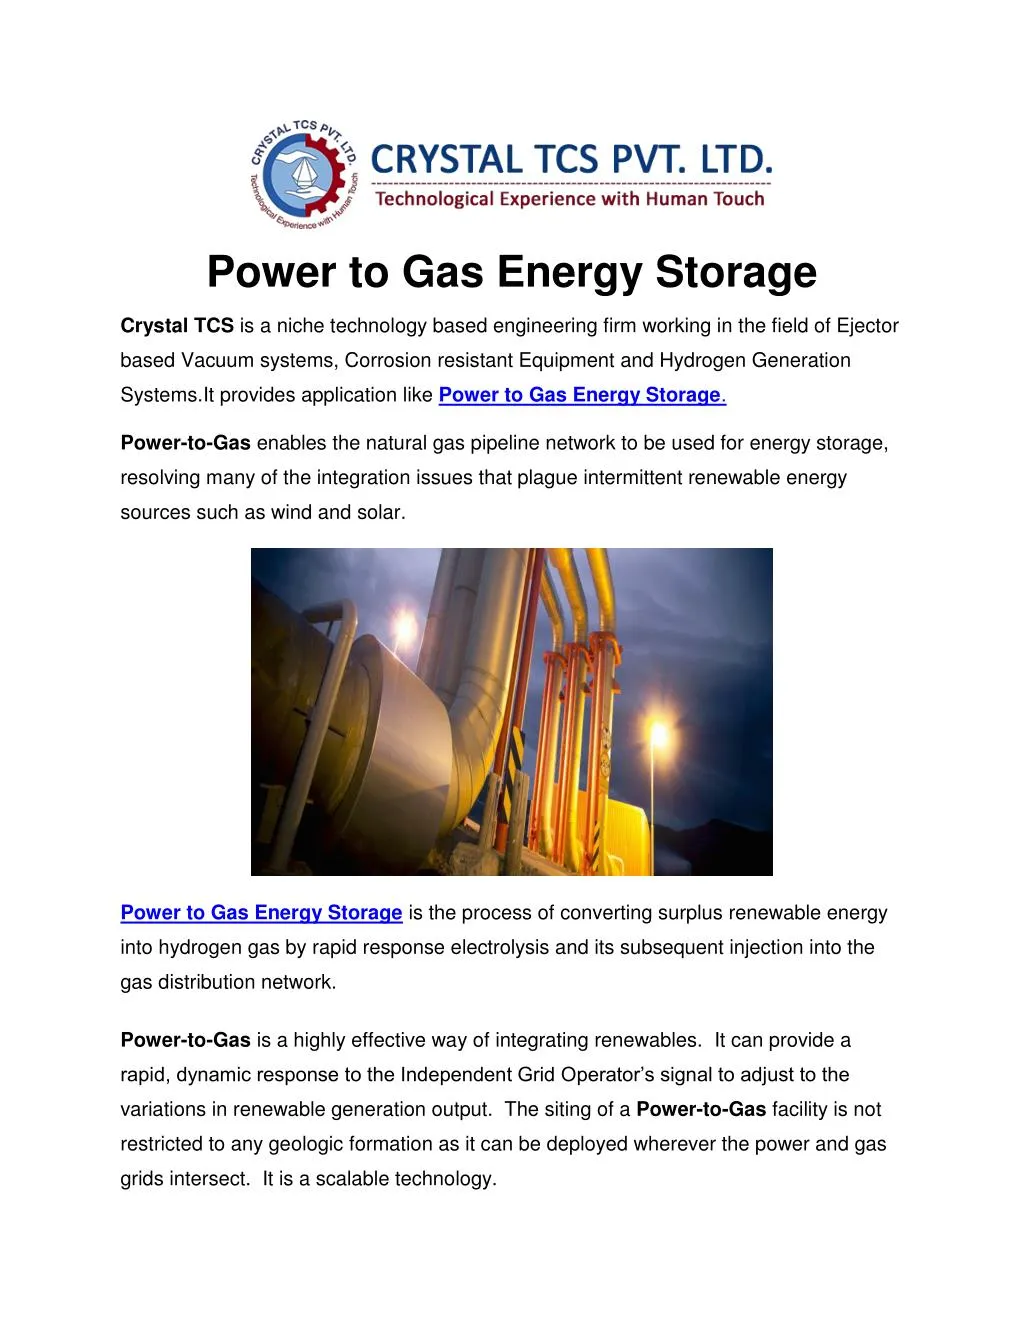 power to gas energy storage